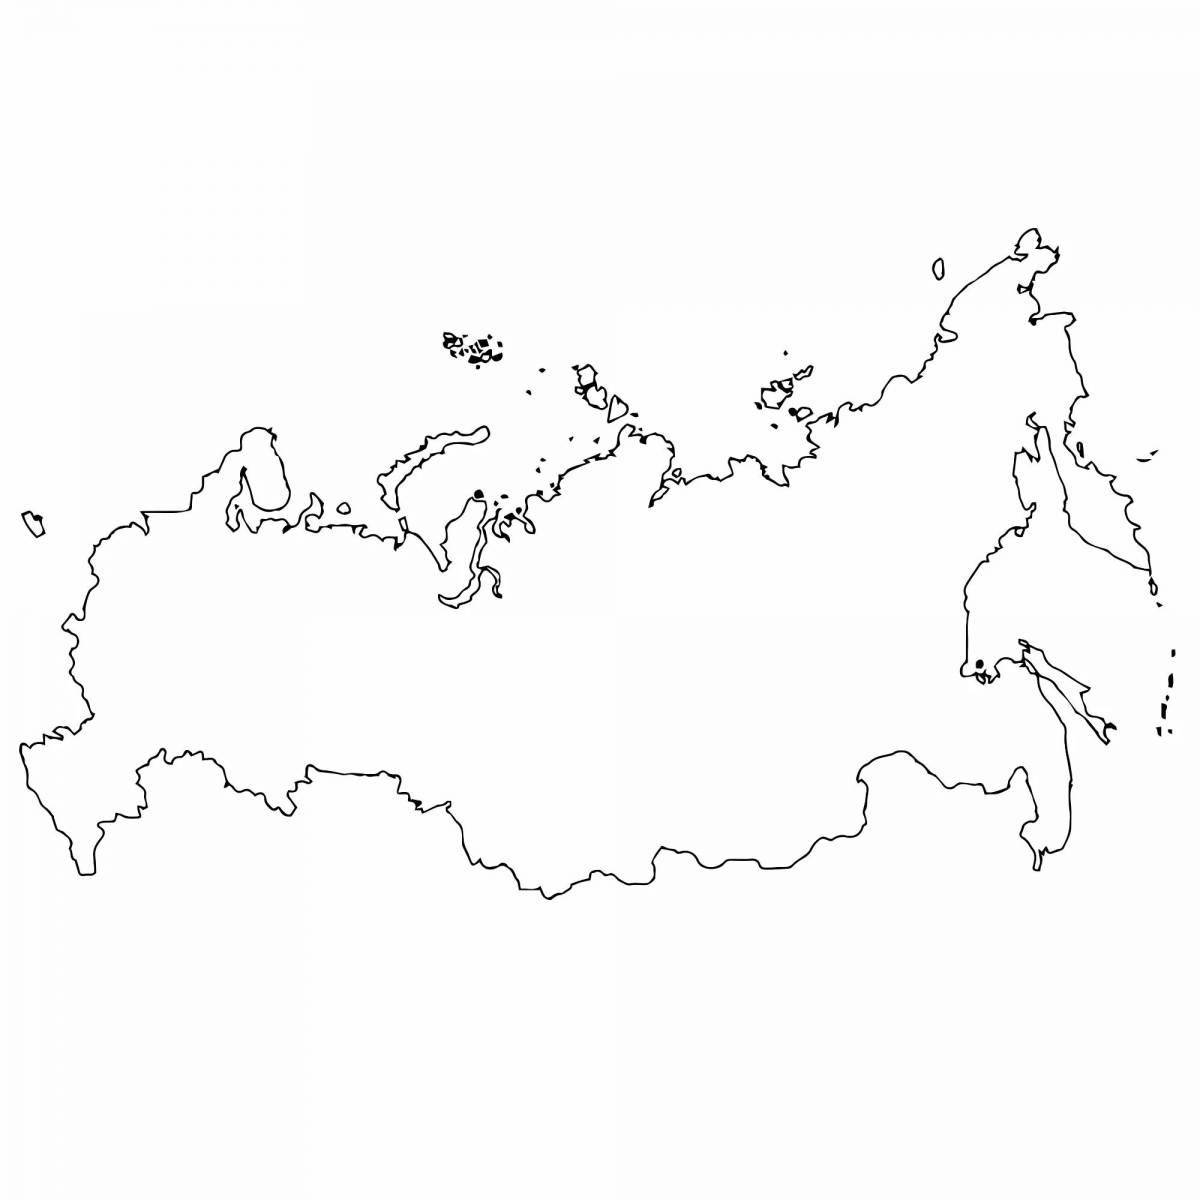 Impressive big map of russia